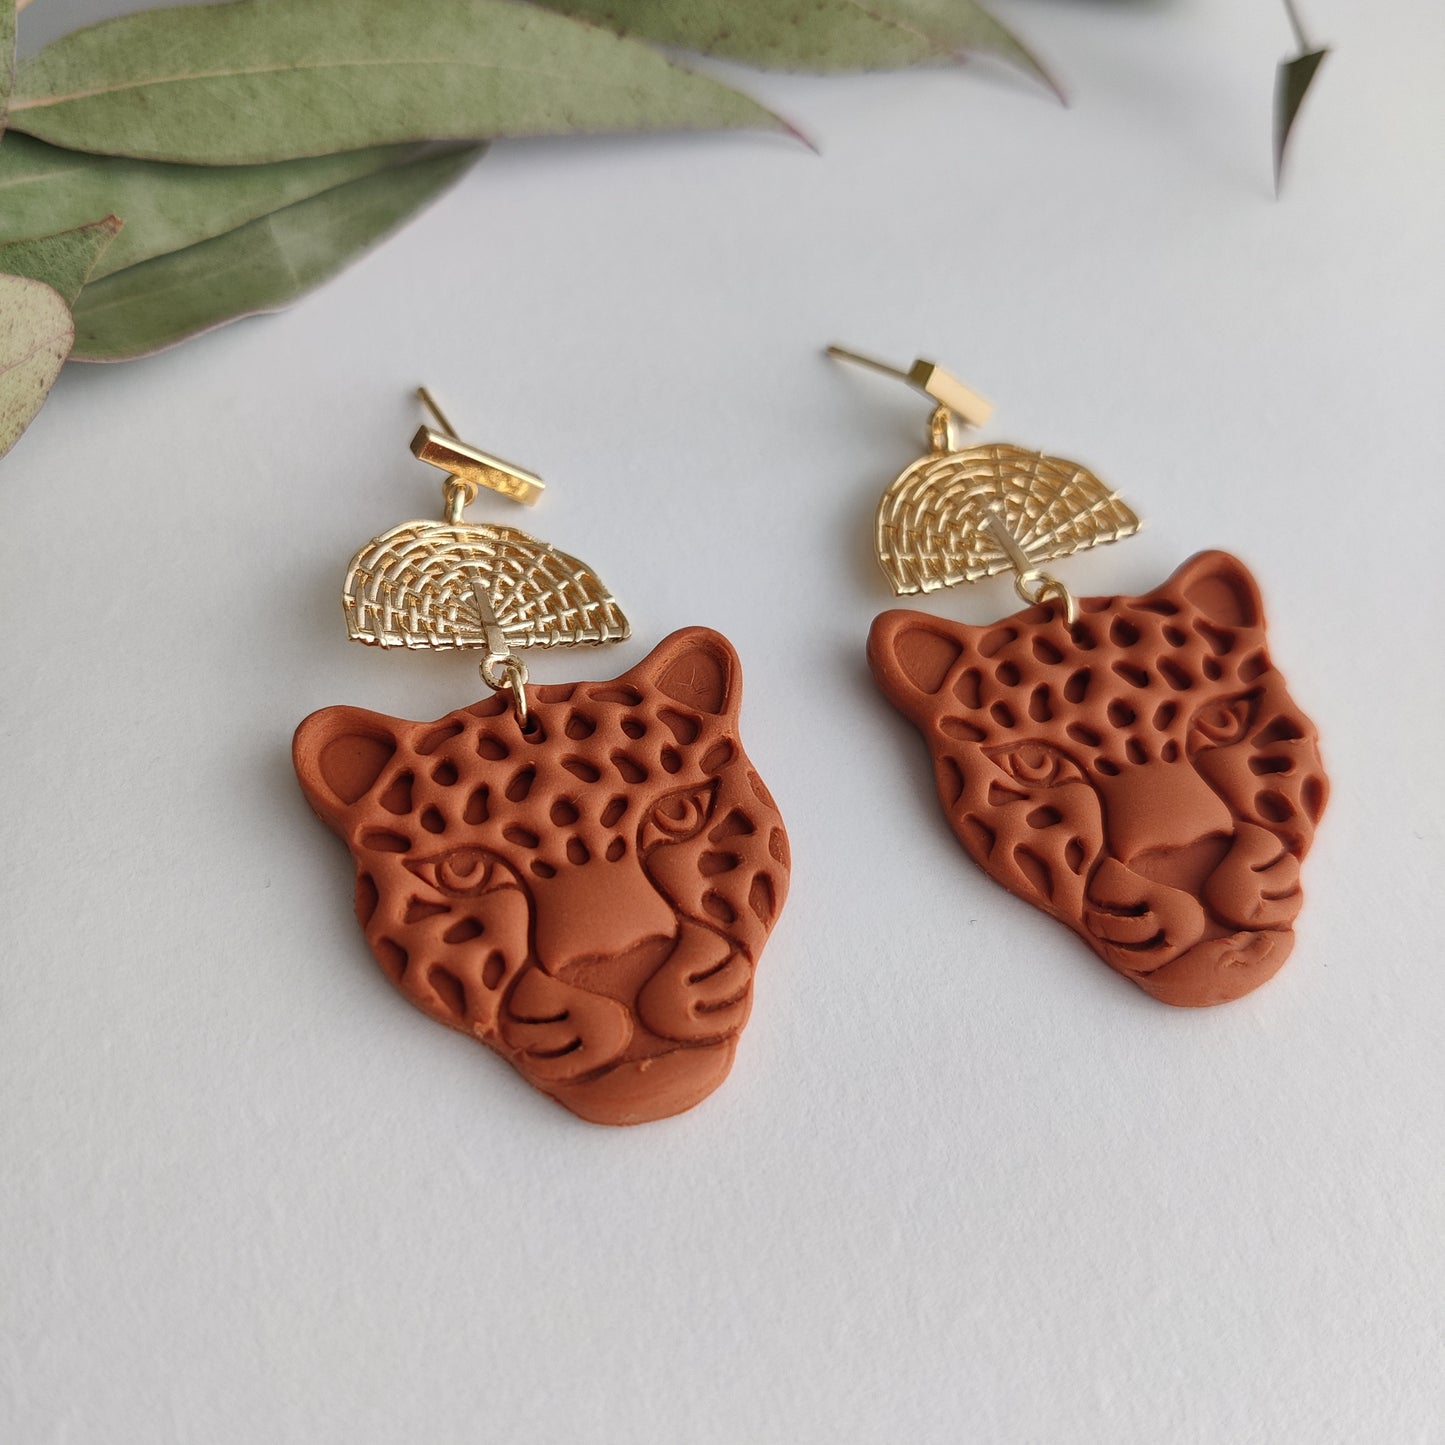 Autumn Collection | Autumn Earrings | Handmade Pumpkin polymer clay earrings | Fall foliage earrings | Fall colors earrings | Cosy